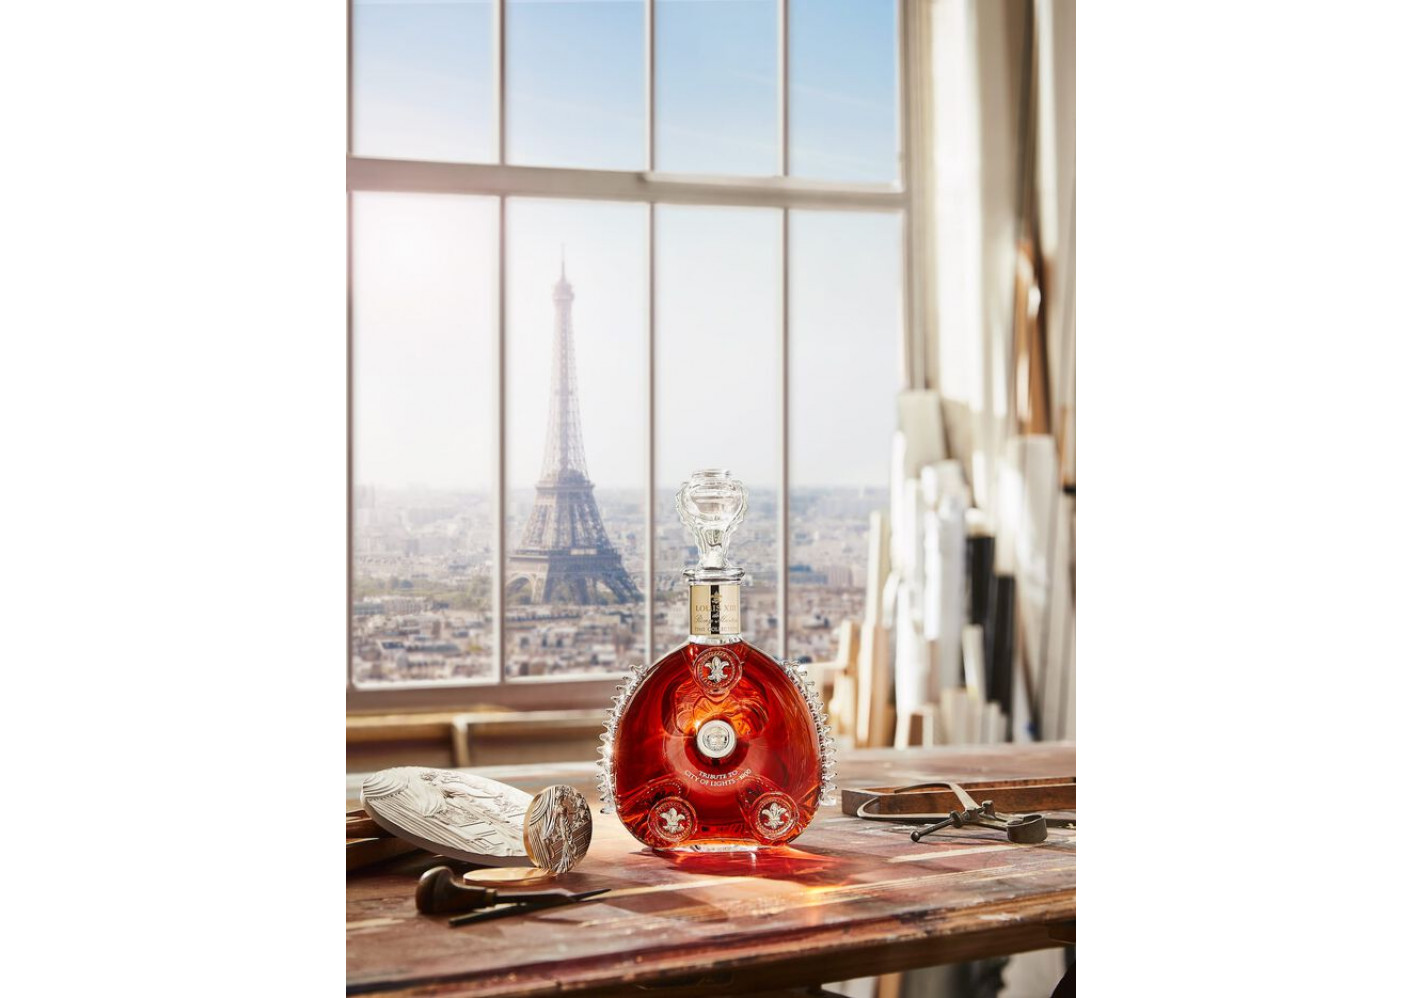 Remy Martin Louis XIII Cognac - Miniature Decanter Set - Just